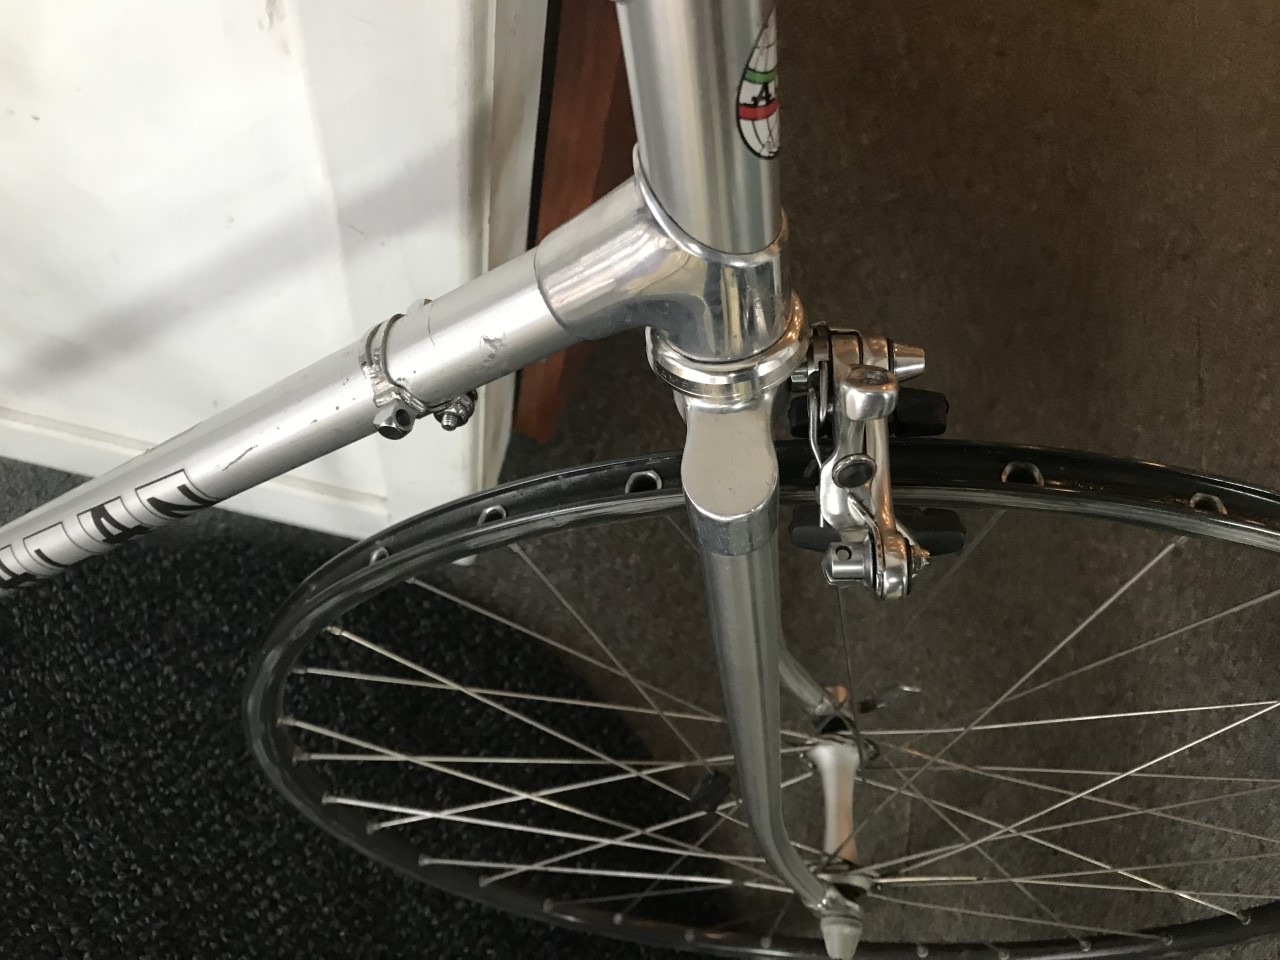 Image of fork crown and head tube of Alan bike